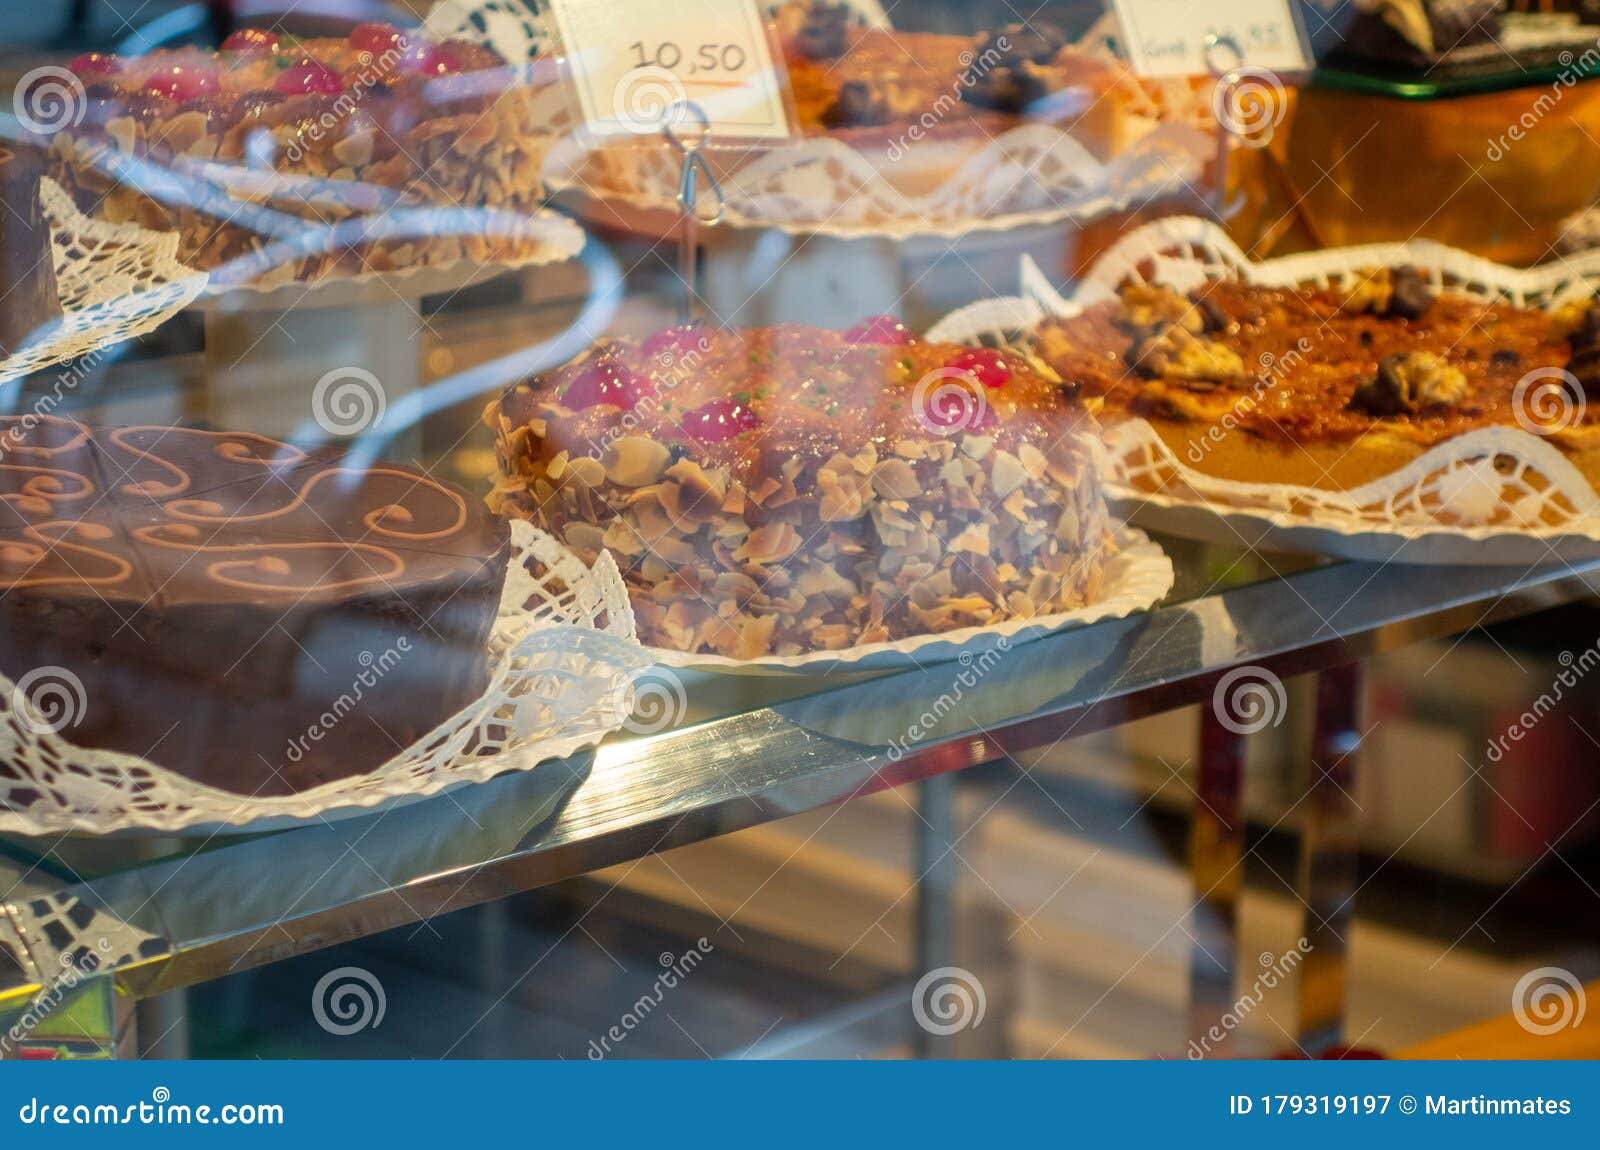 bakery shop window with delicios cakes